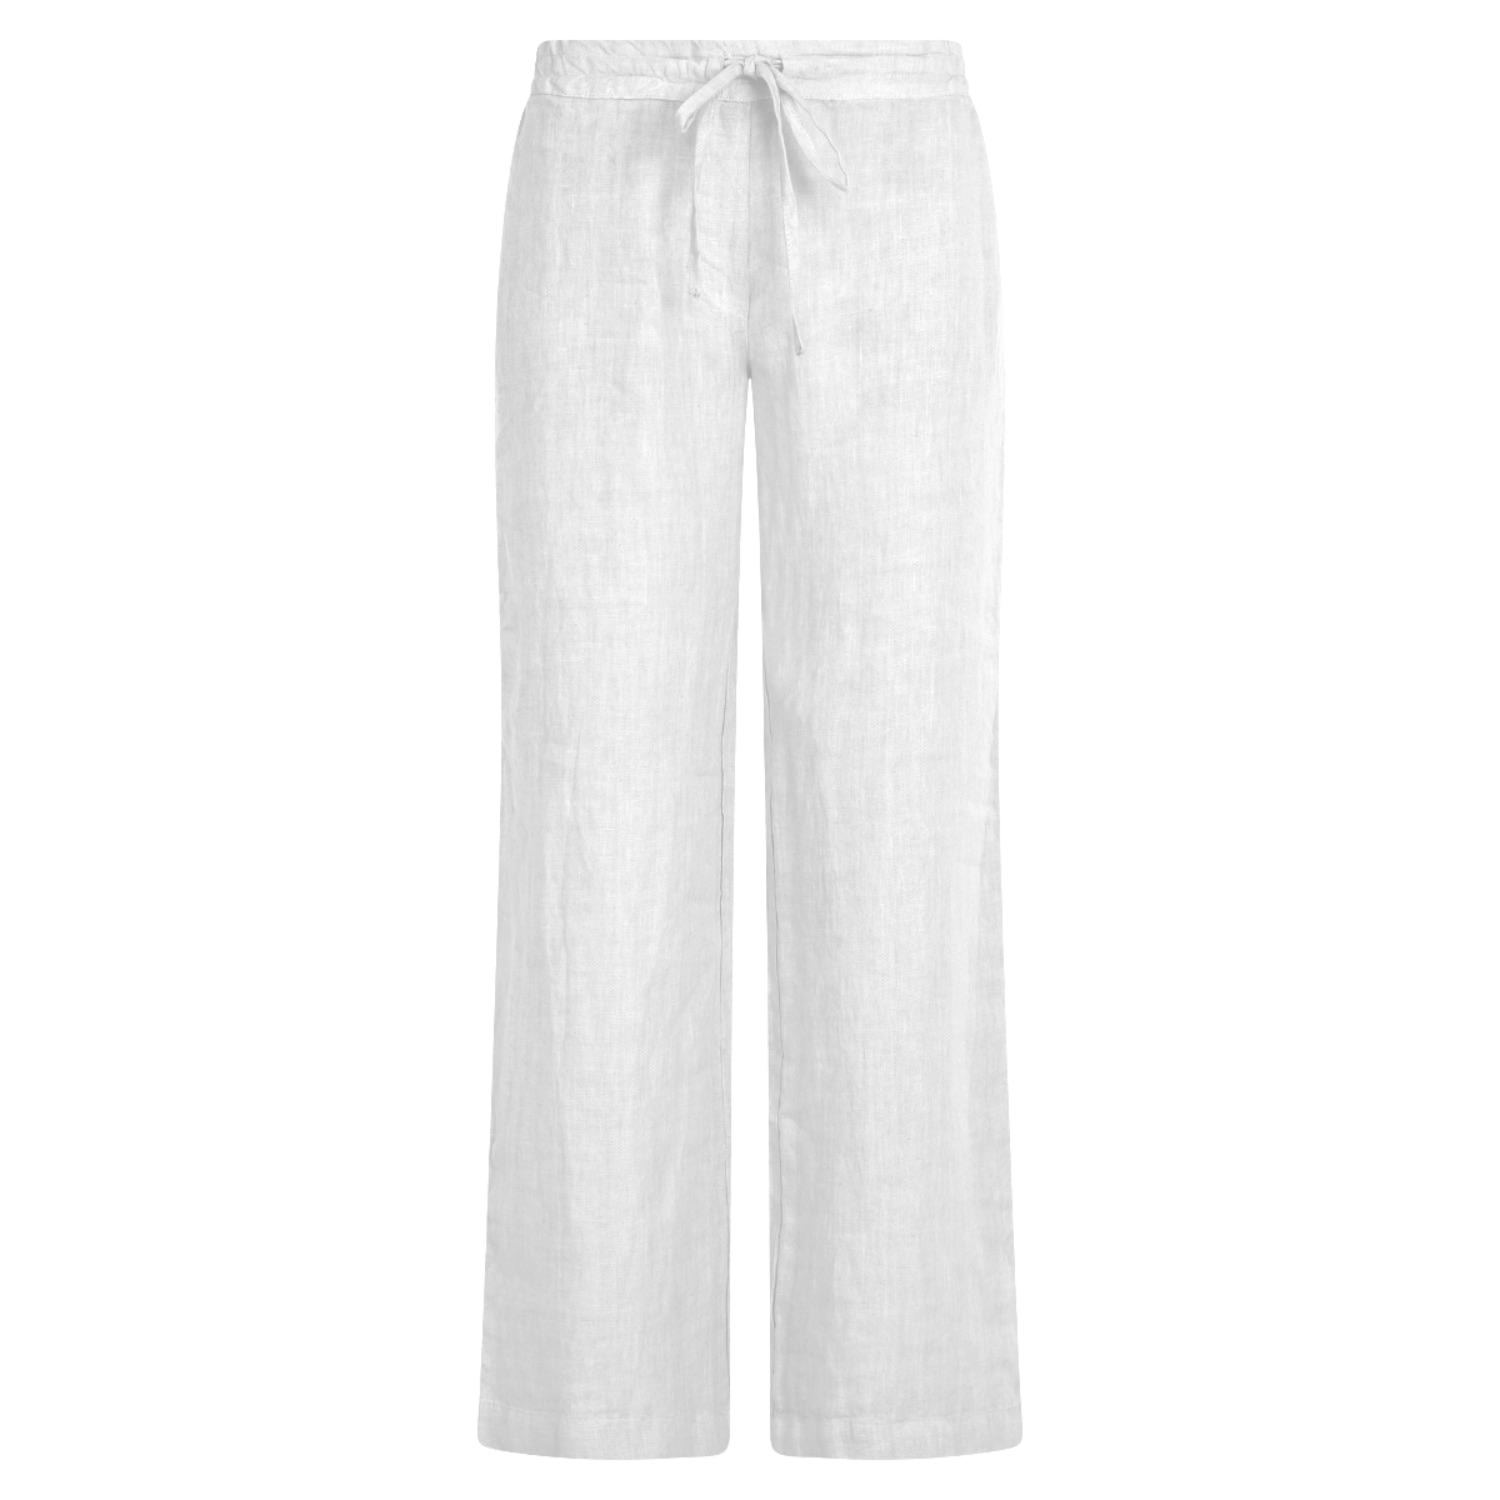 Haris Cotton Women's White Wide Legged Linen Pants - Whiite